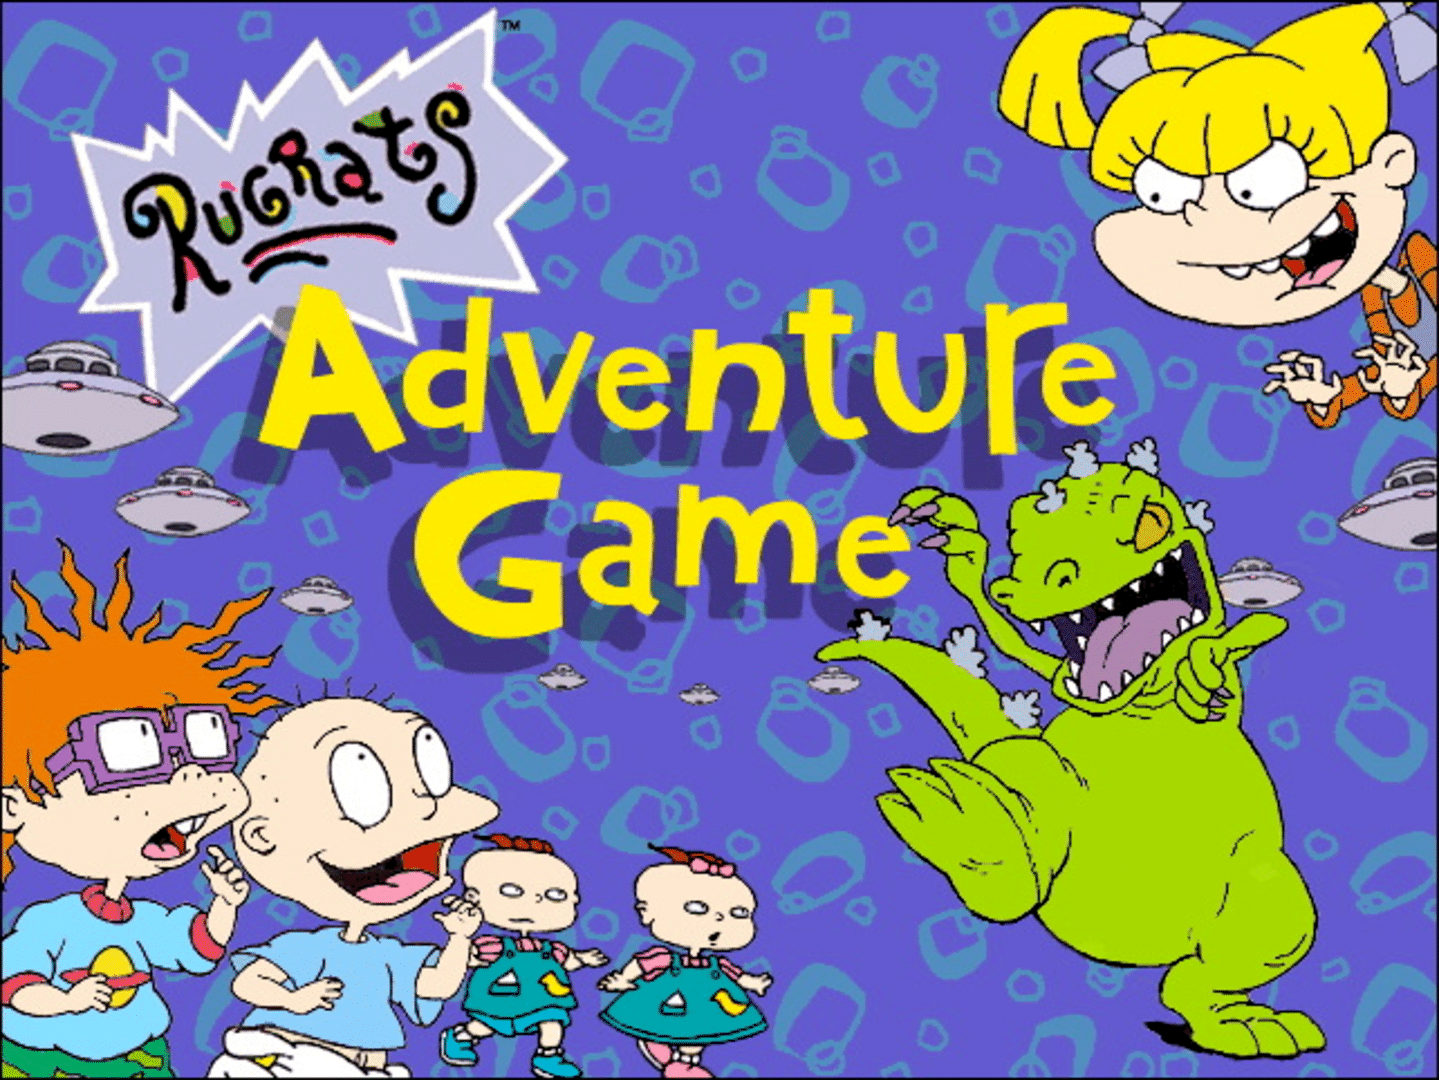 Rugrats Adventure Game screenshot